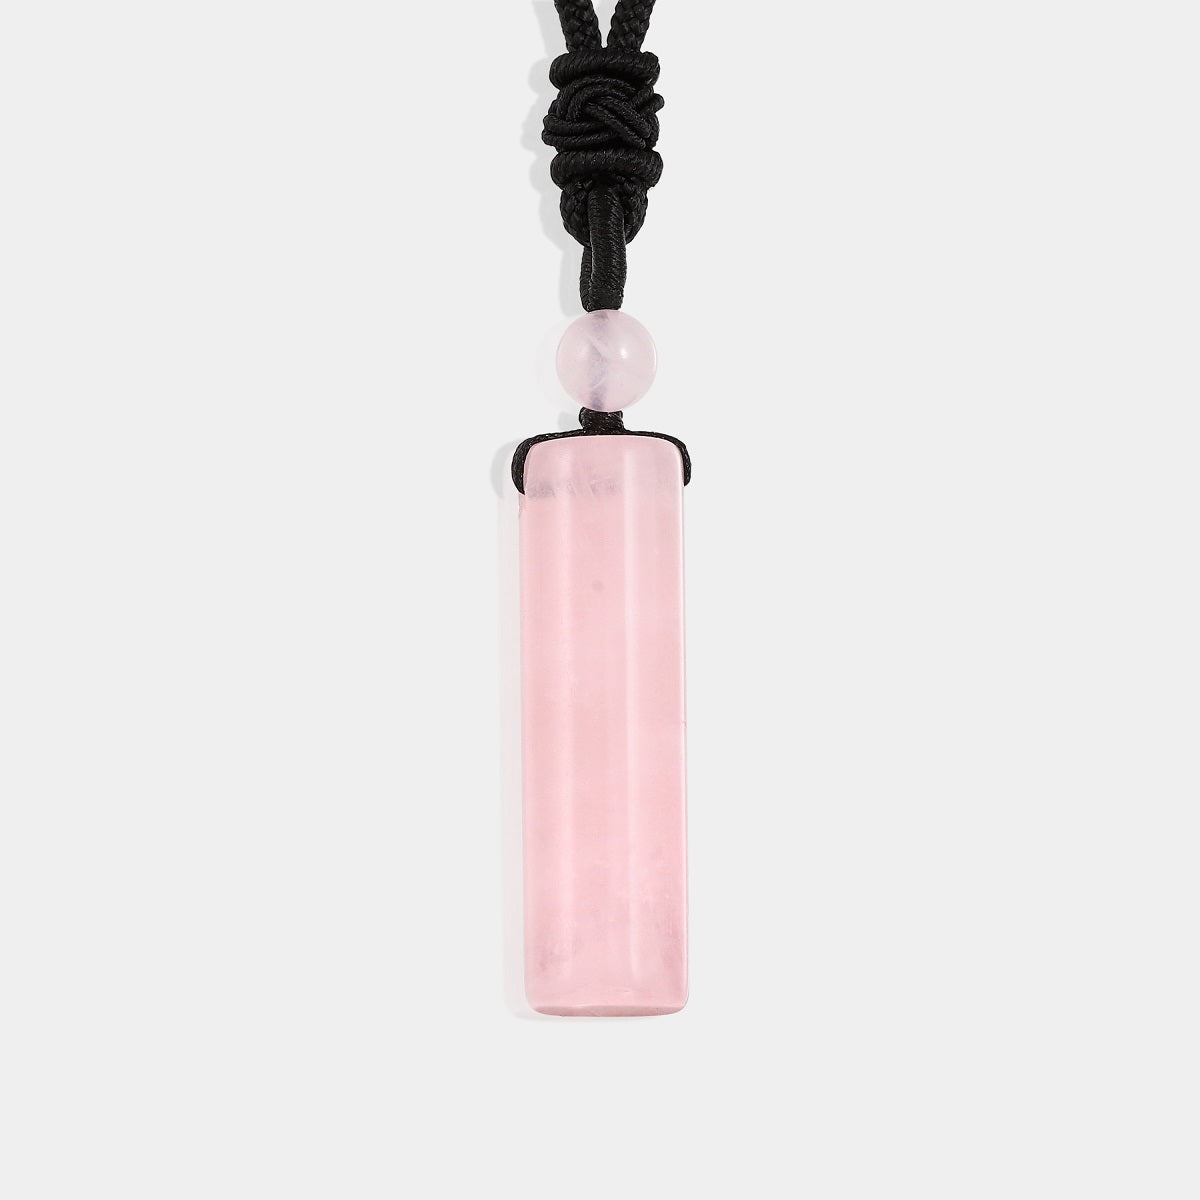 "Smooth cylinder-shaped Rose Quartz gemstone in soothing pink color